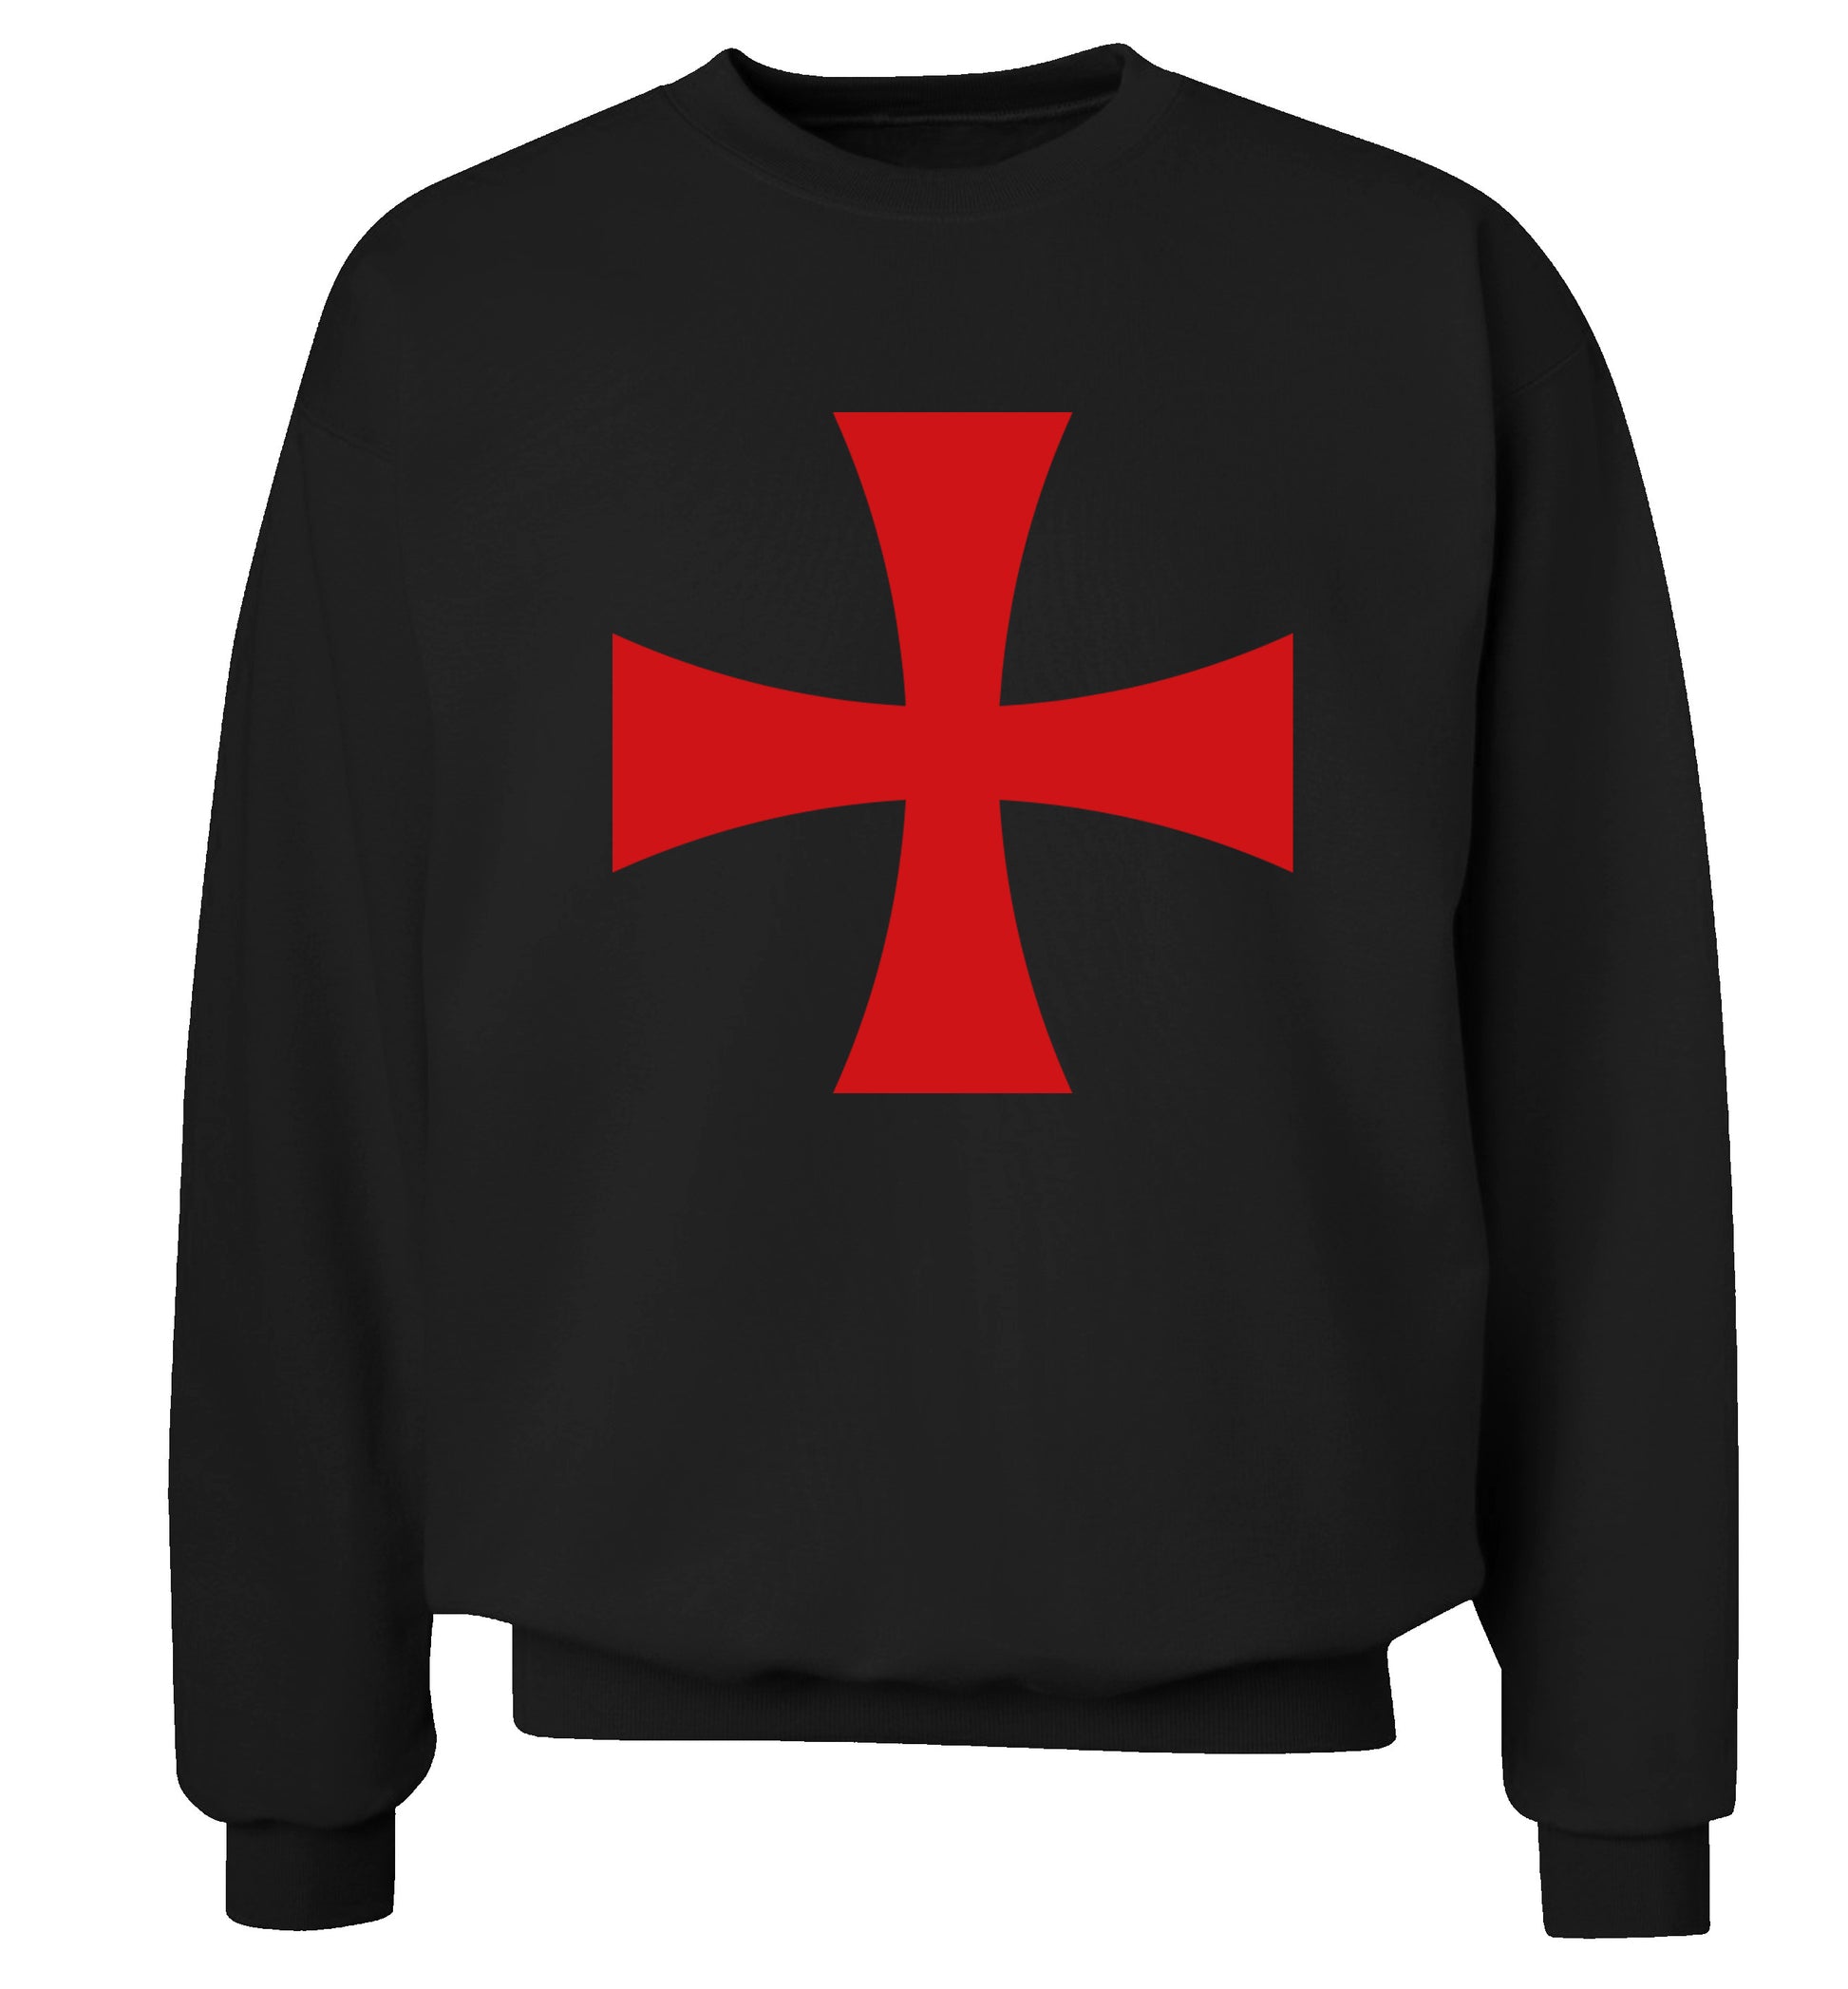 Knights Templar cross Adult's unisex black Sweater 2XL